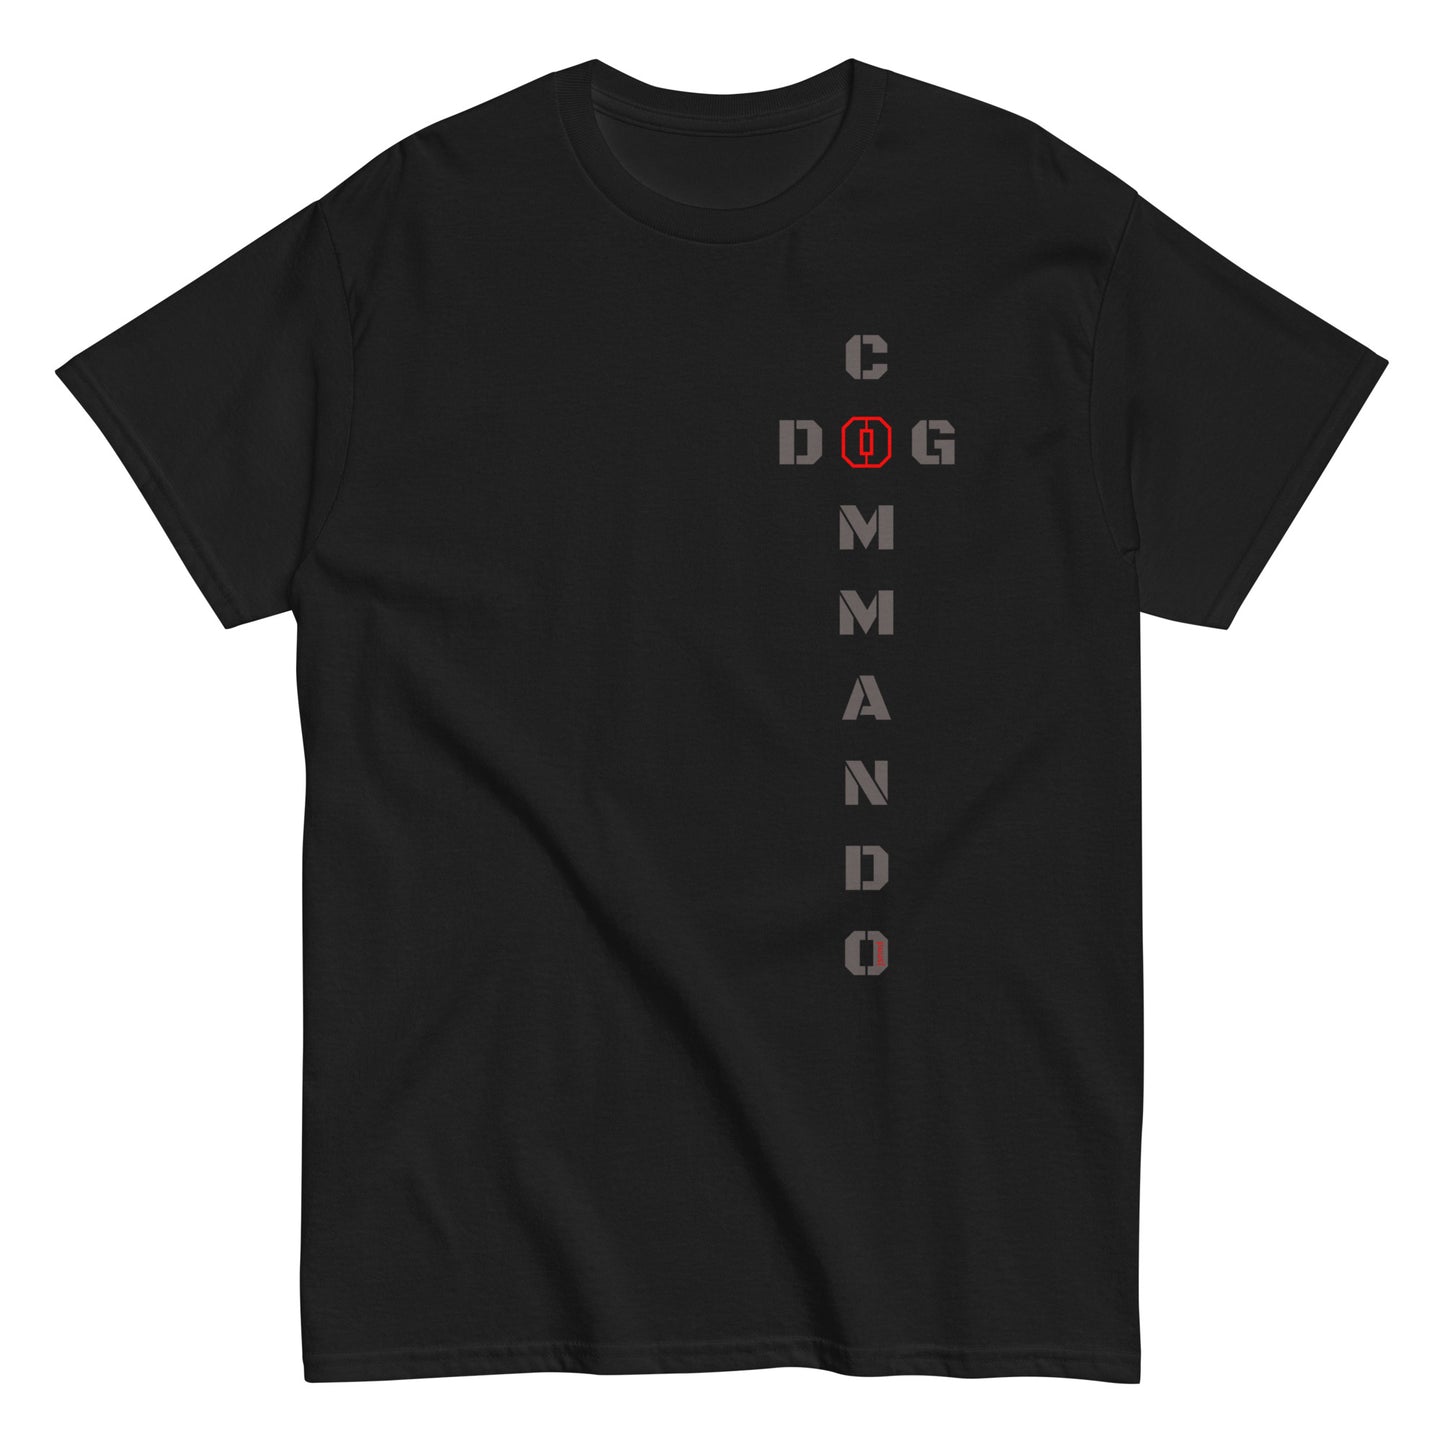 Dog Commando T-shirt